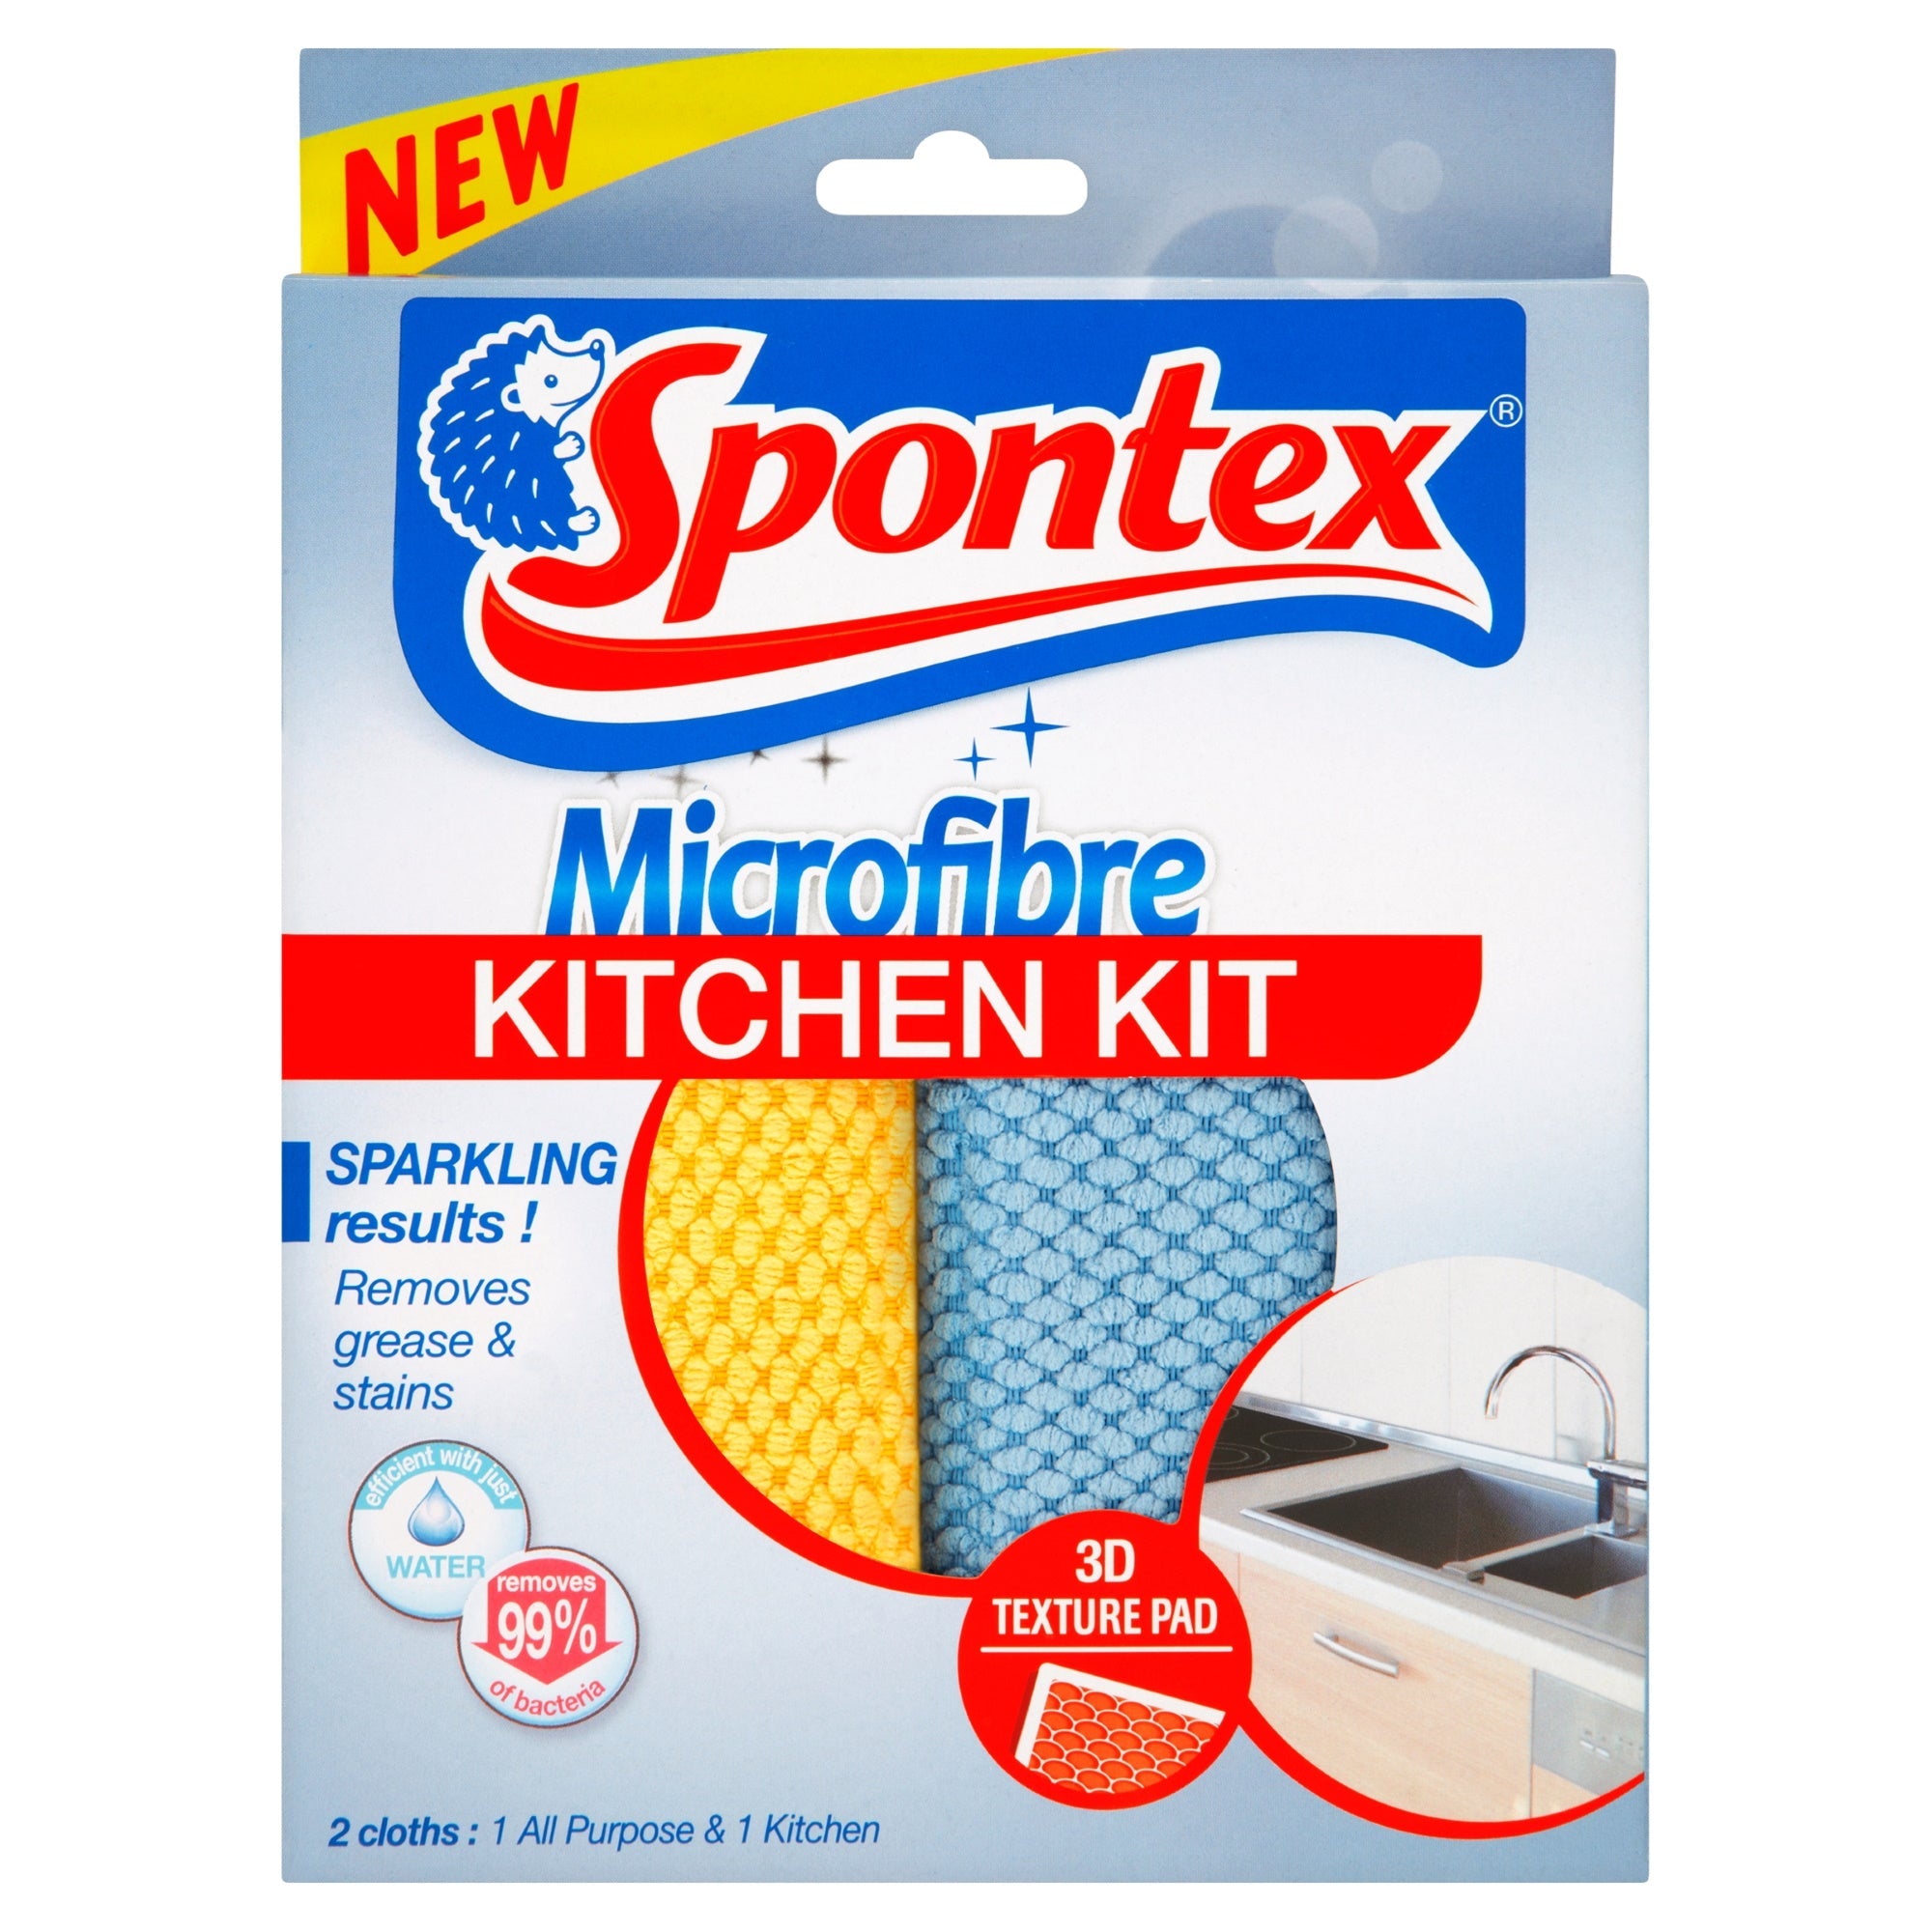 Spontex Microfibre Kitchen Kit - Pack of 2 Cloths - Premium Dusters / Cloths from Spontex - Just $5.95! Shop now at W Hurst & Son (IW) Ltd